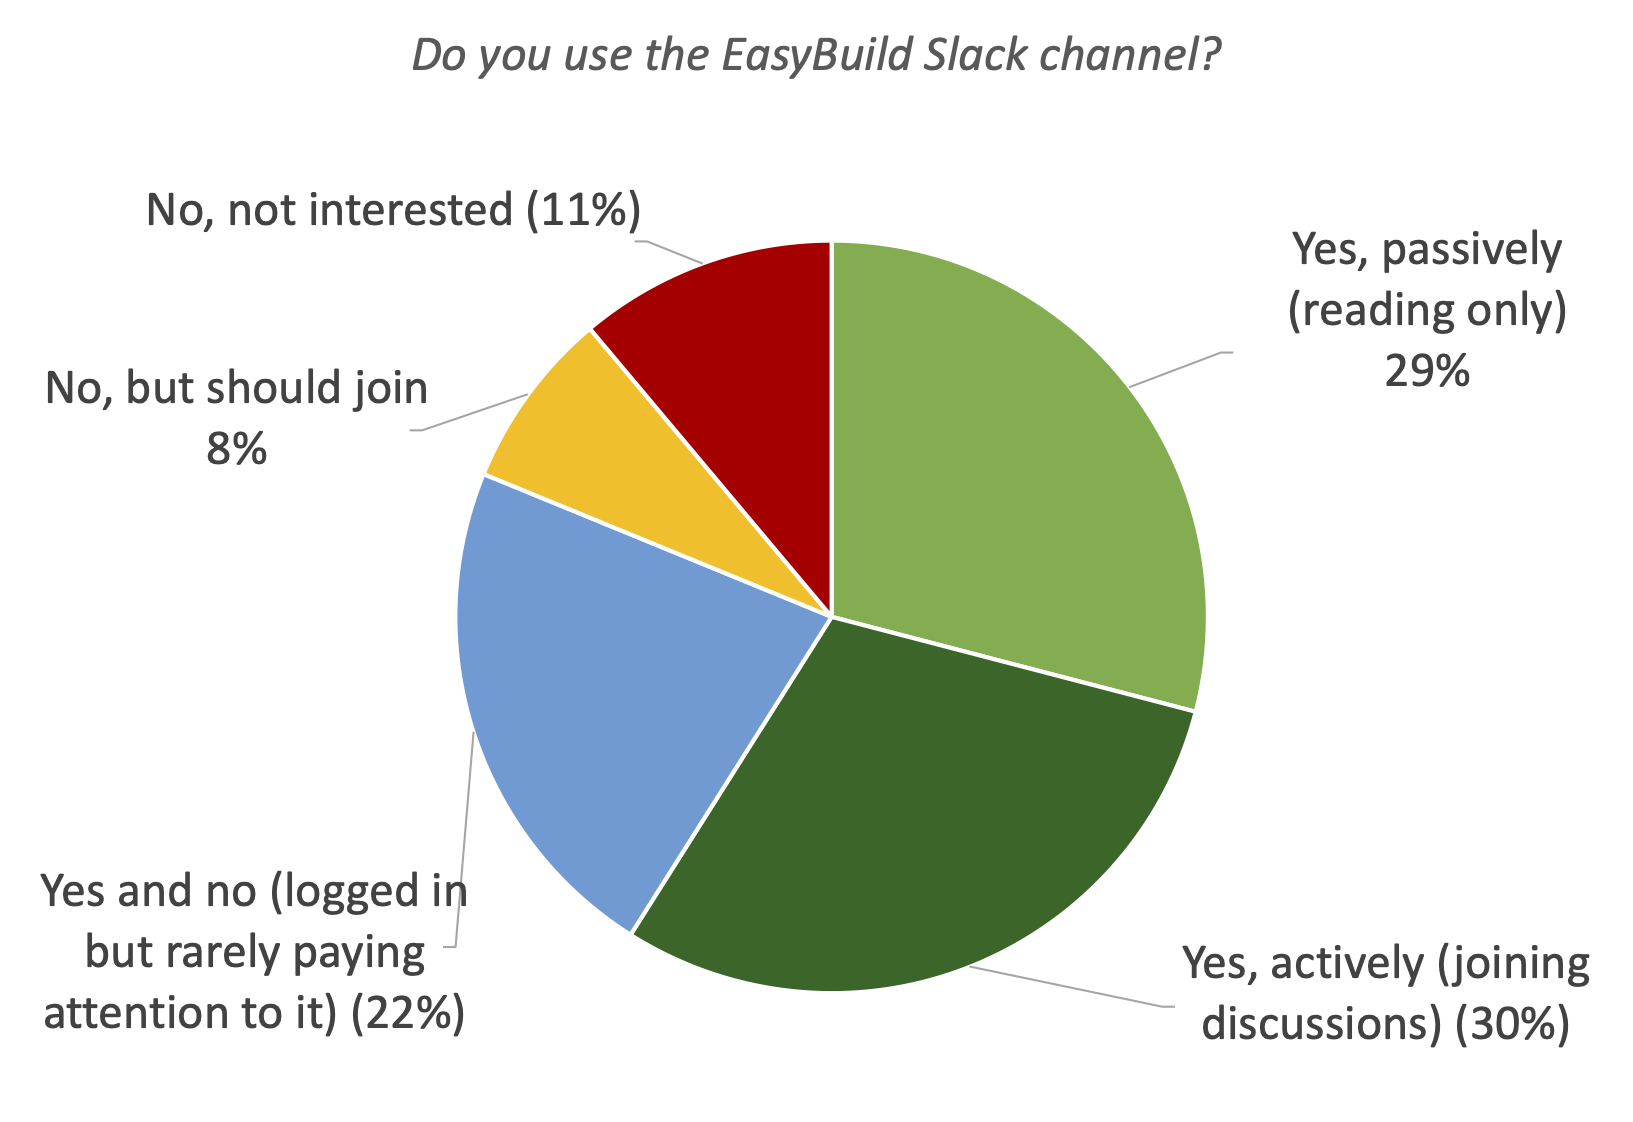 32. Do you use the EasyBuild Slack channel?